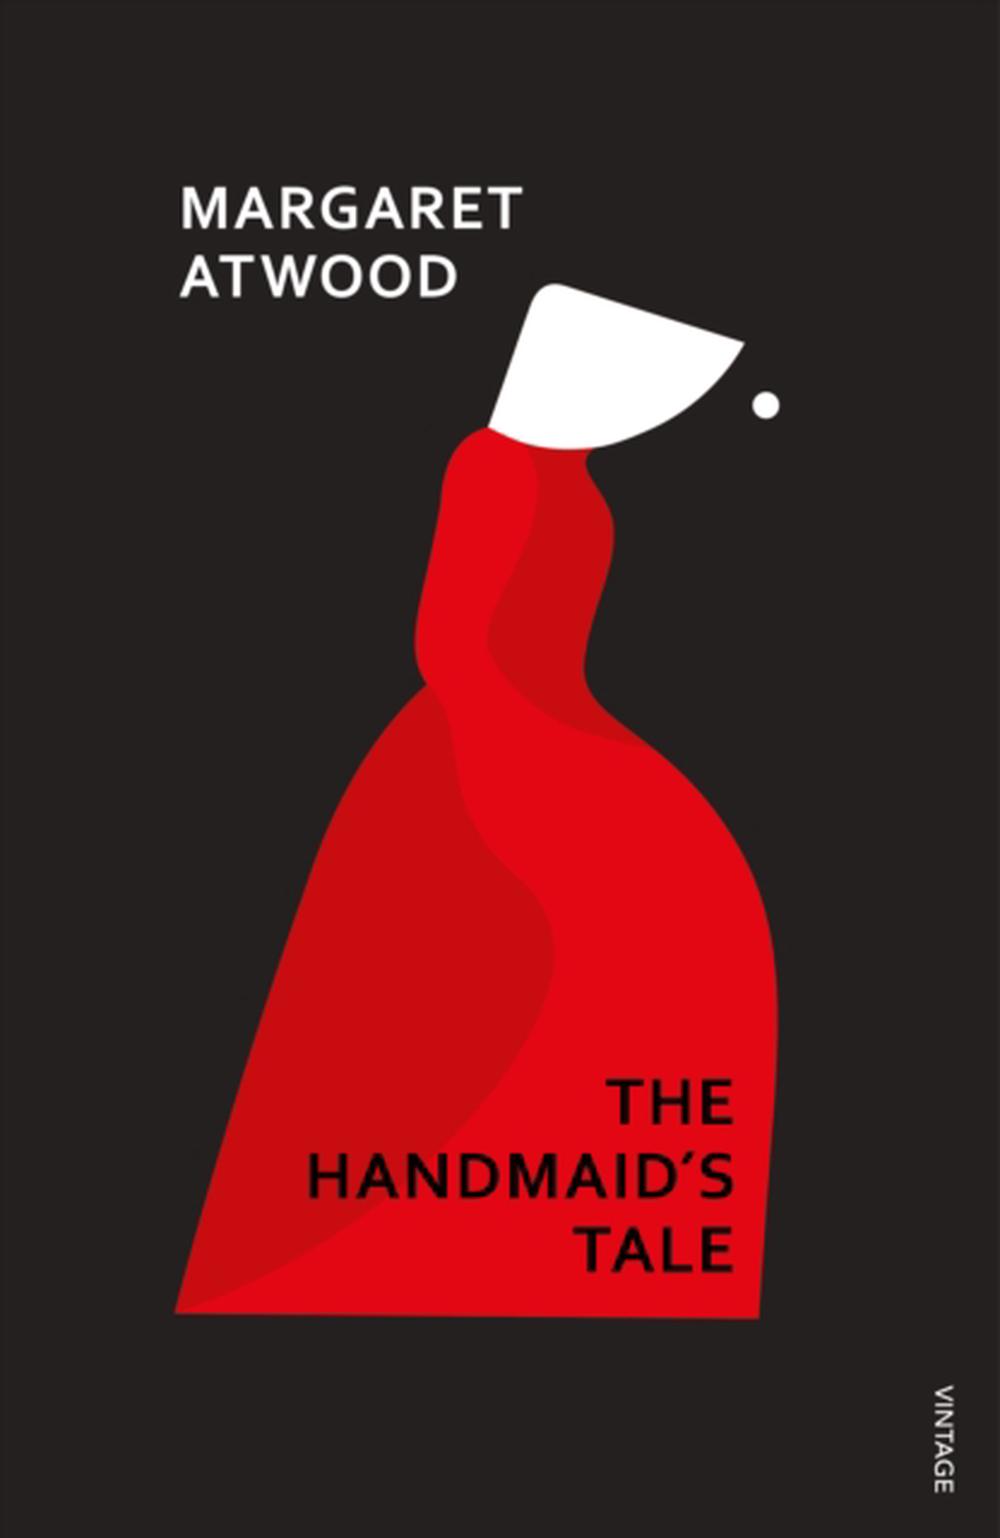 book summary handmaid's tale